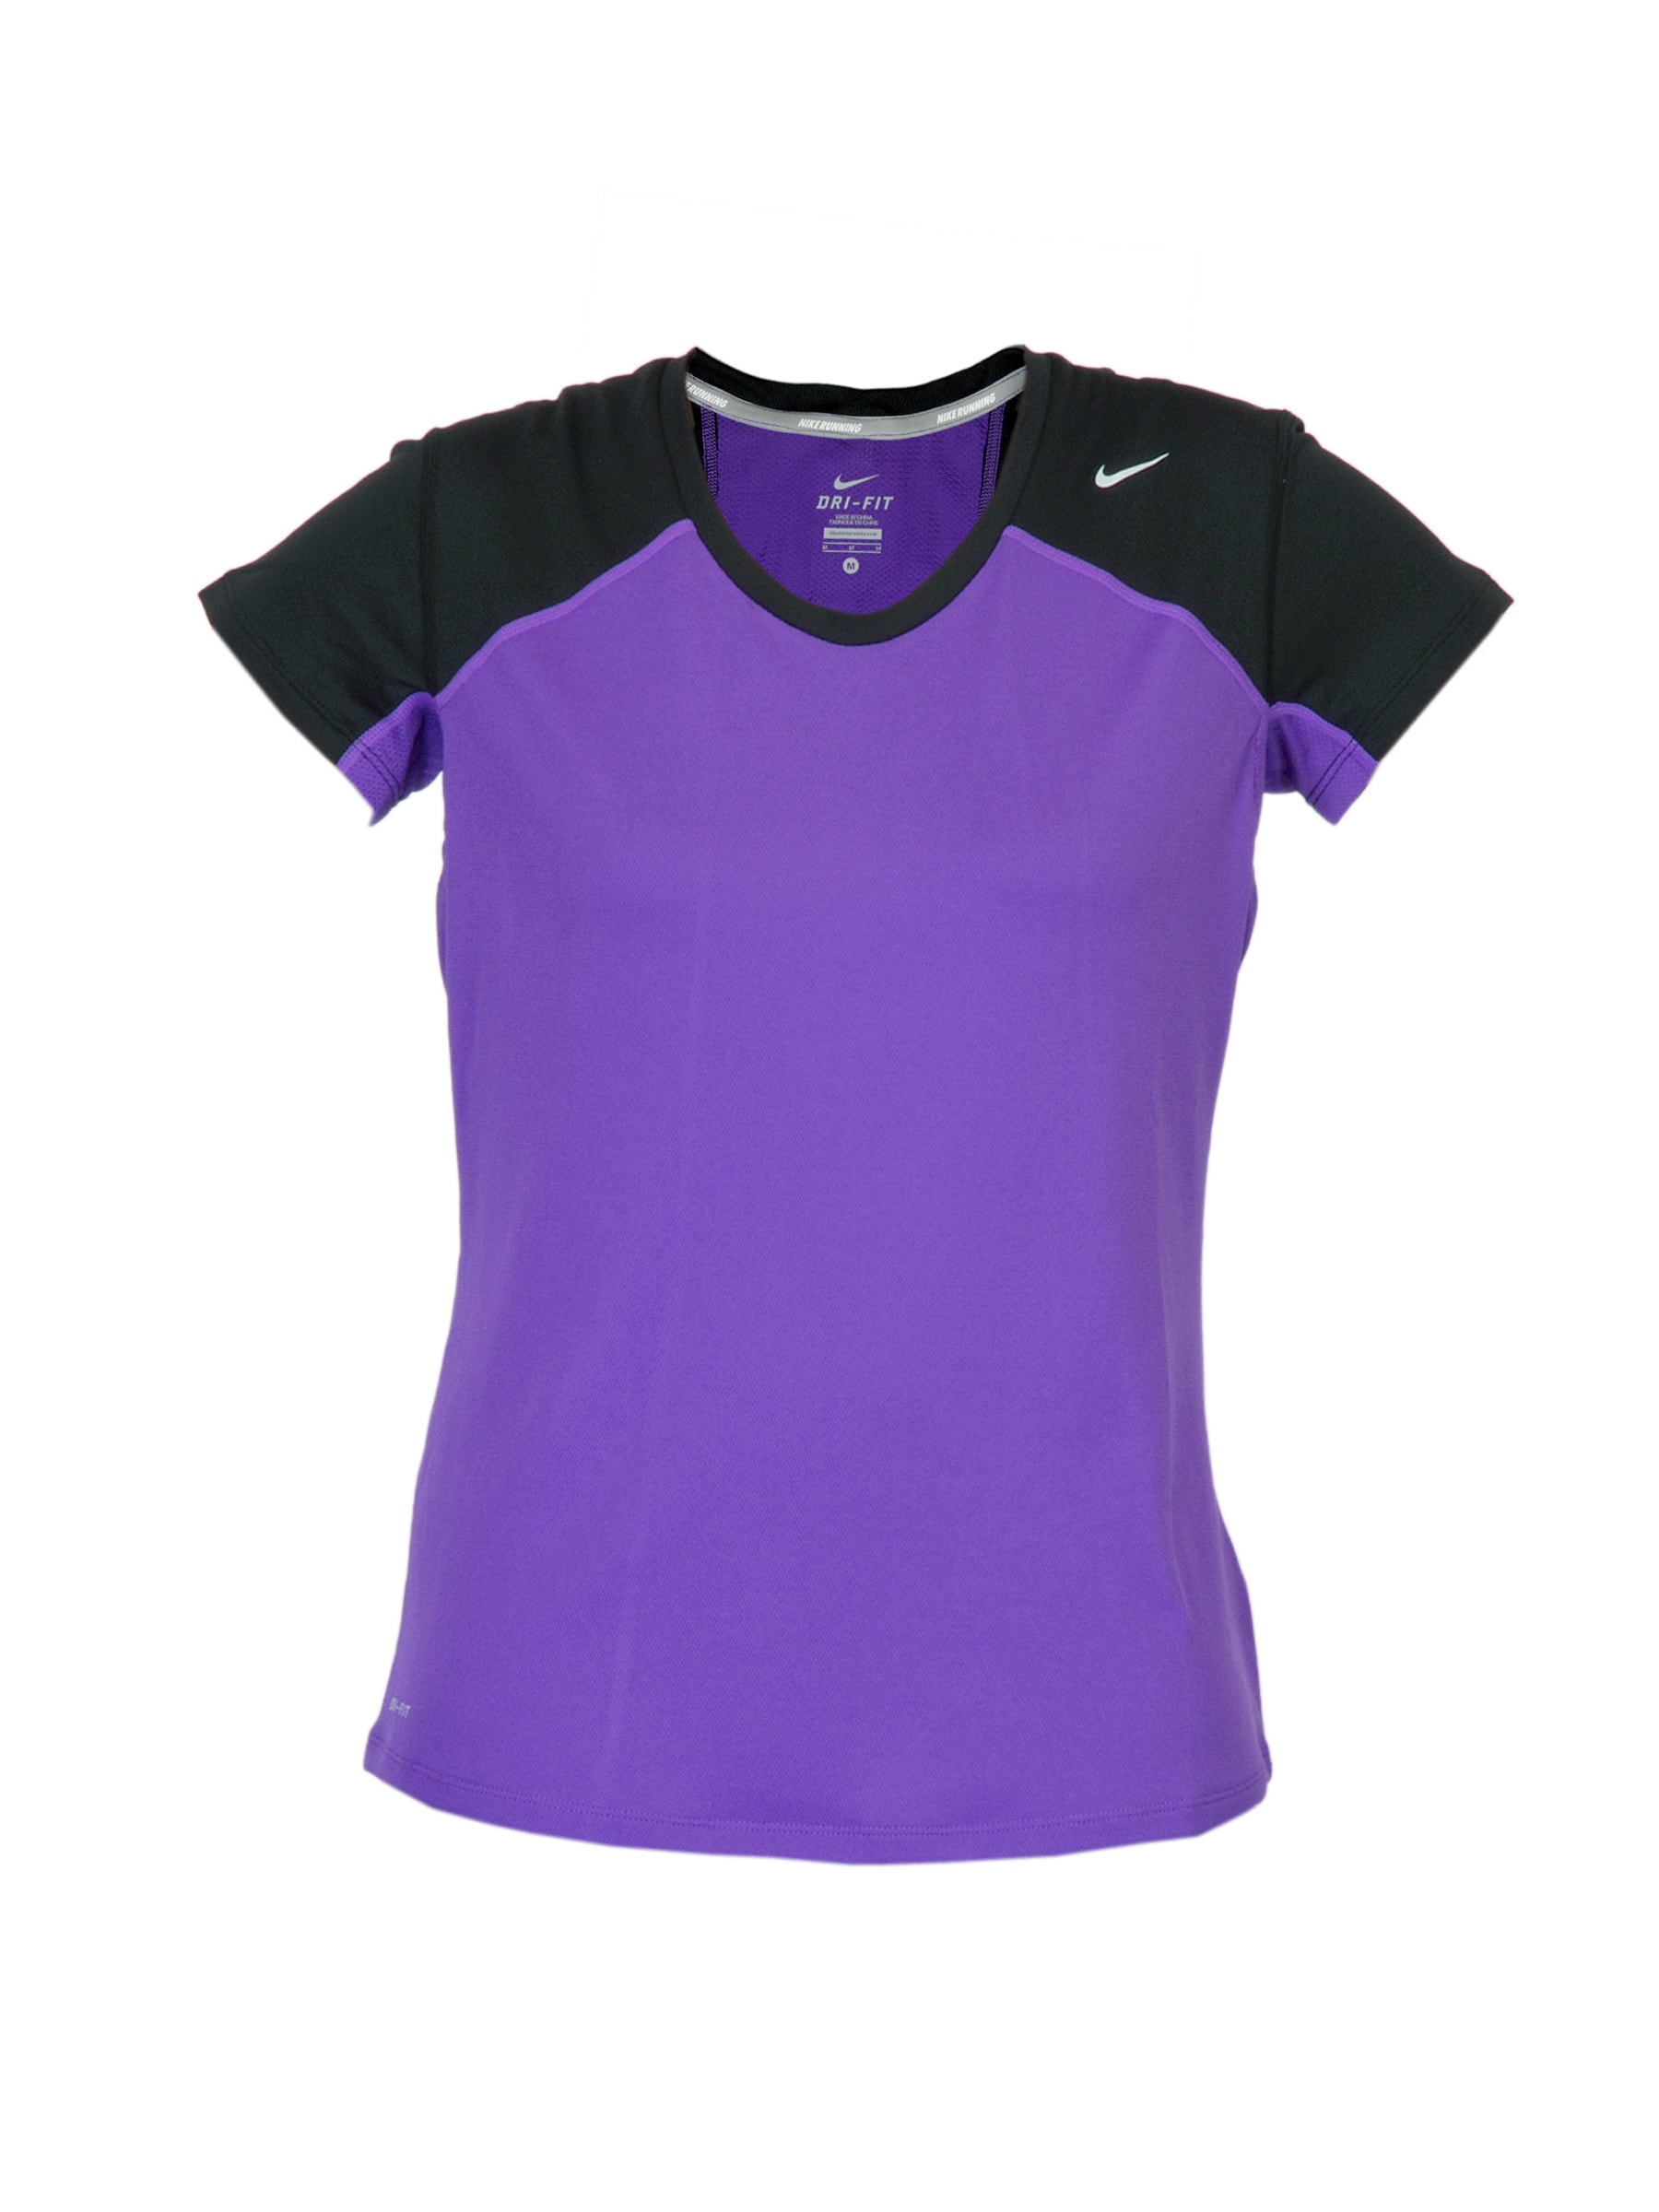 Nike Women Sprinter Purple T-shirt